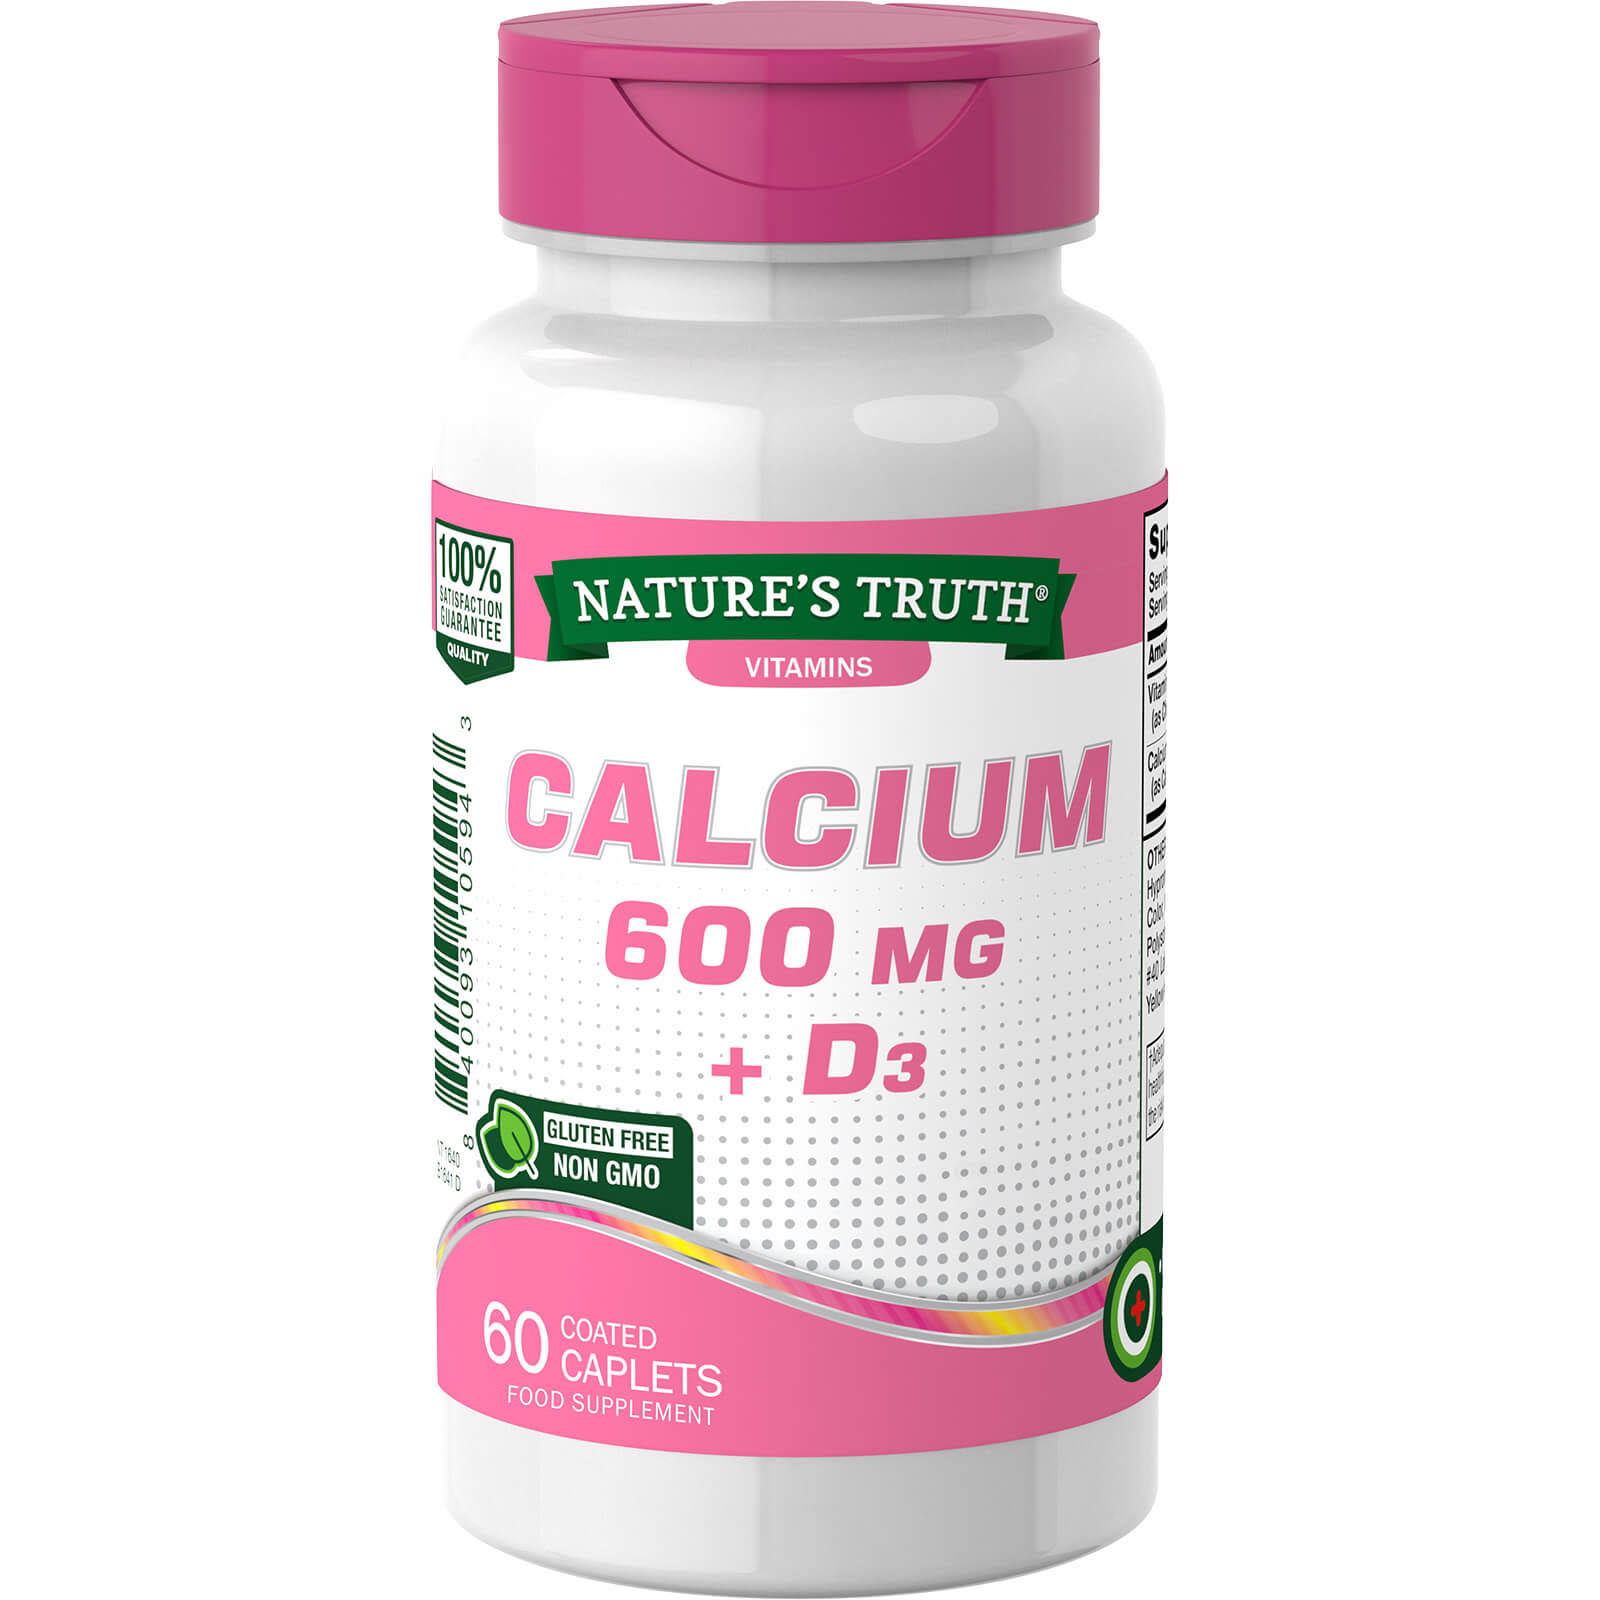 Calcium 600 vitamin d3. Витамин д плюс кальций. Praziquqntel 600 MG. 2029894599627vitamin d3 dietary Supplement 120 капсул 600 me. Bounty Calcium poster.